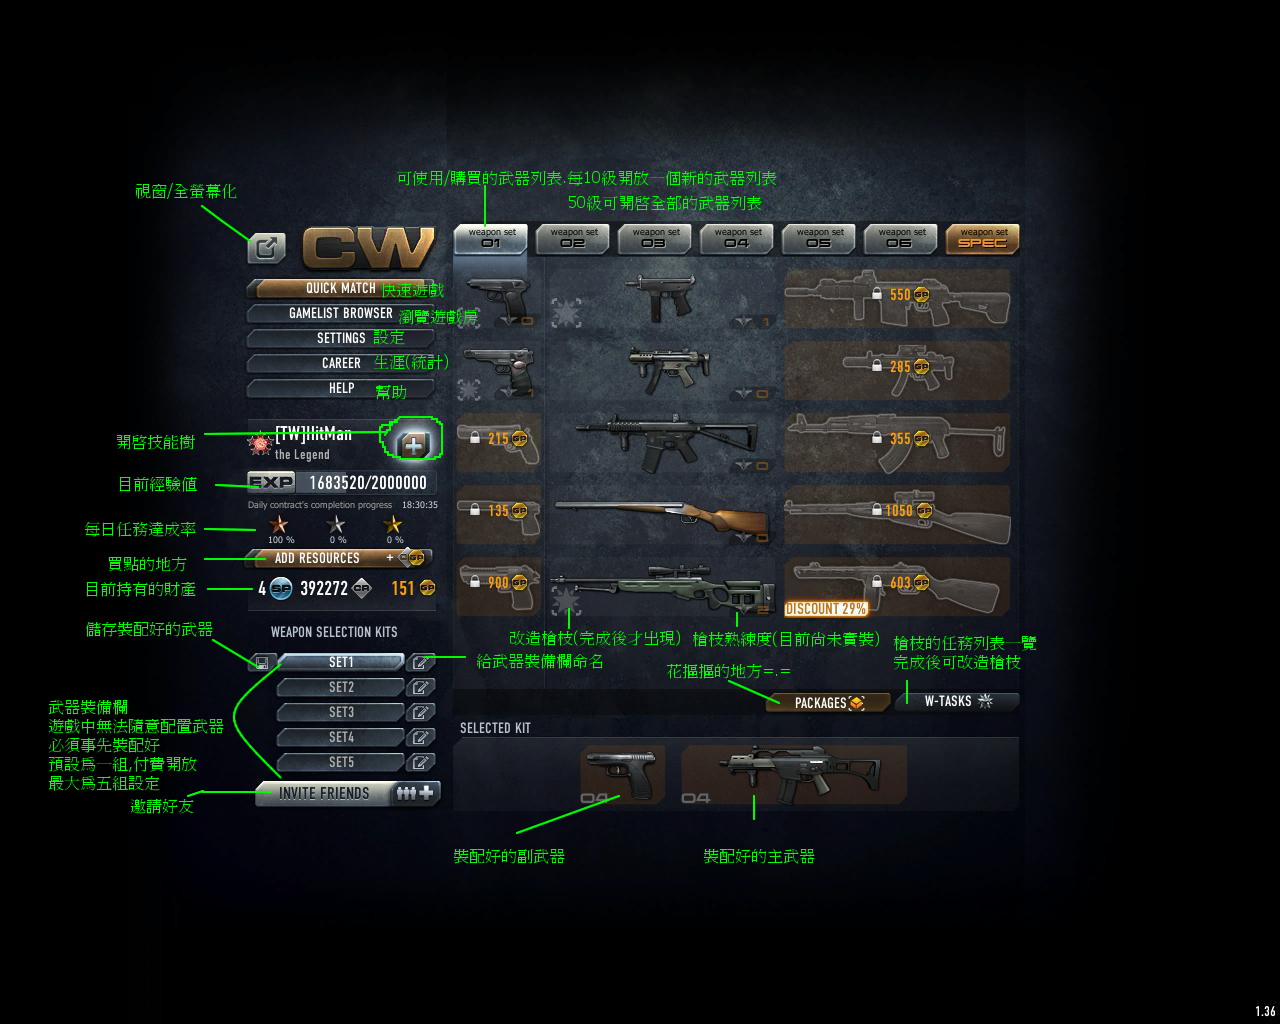 Dantiano Contract Wars Gameplay: Guia do novato, habilidades, armas e  armaduras